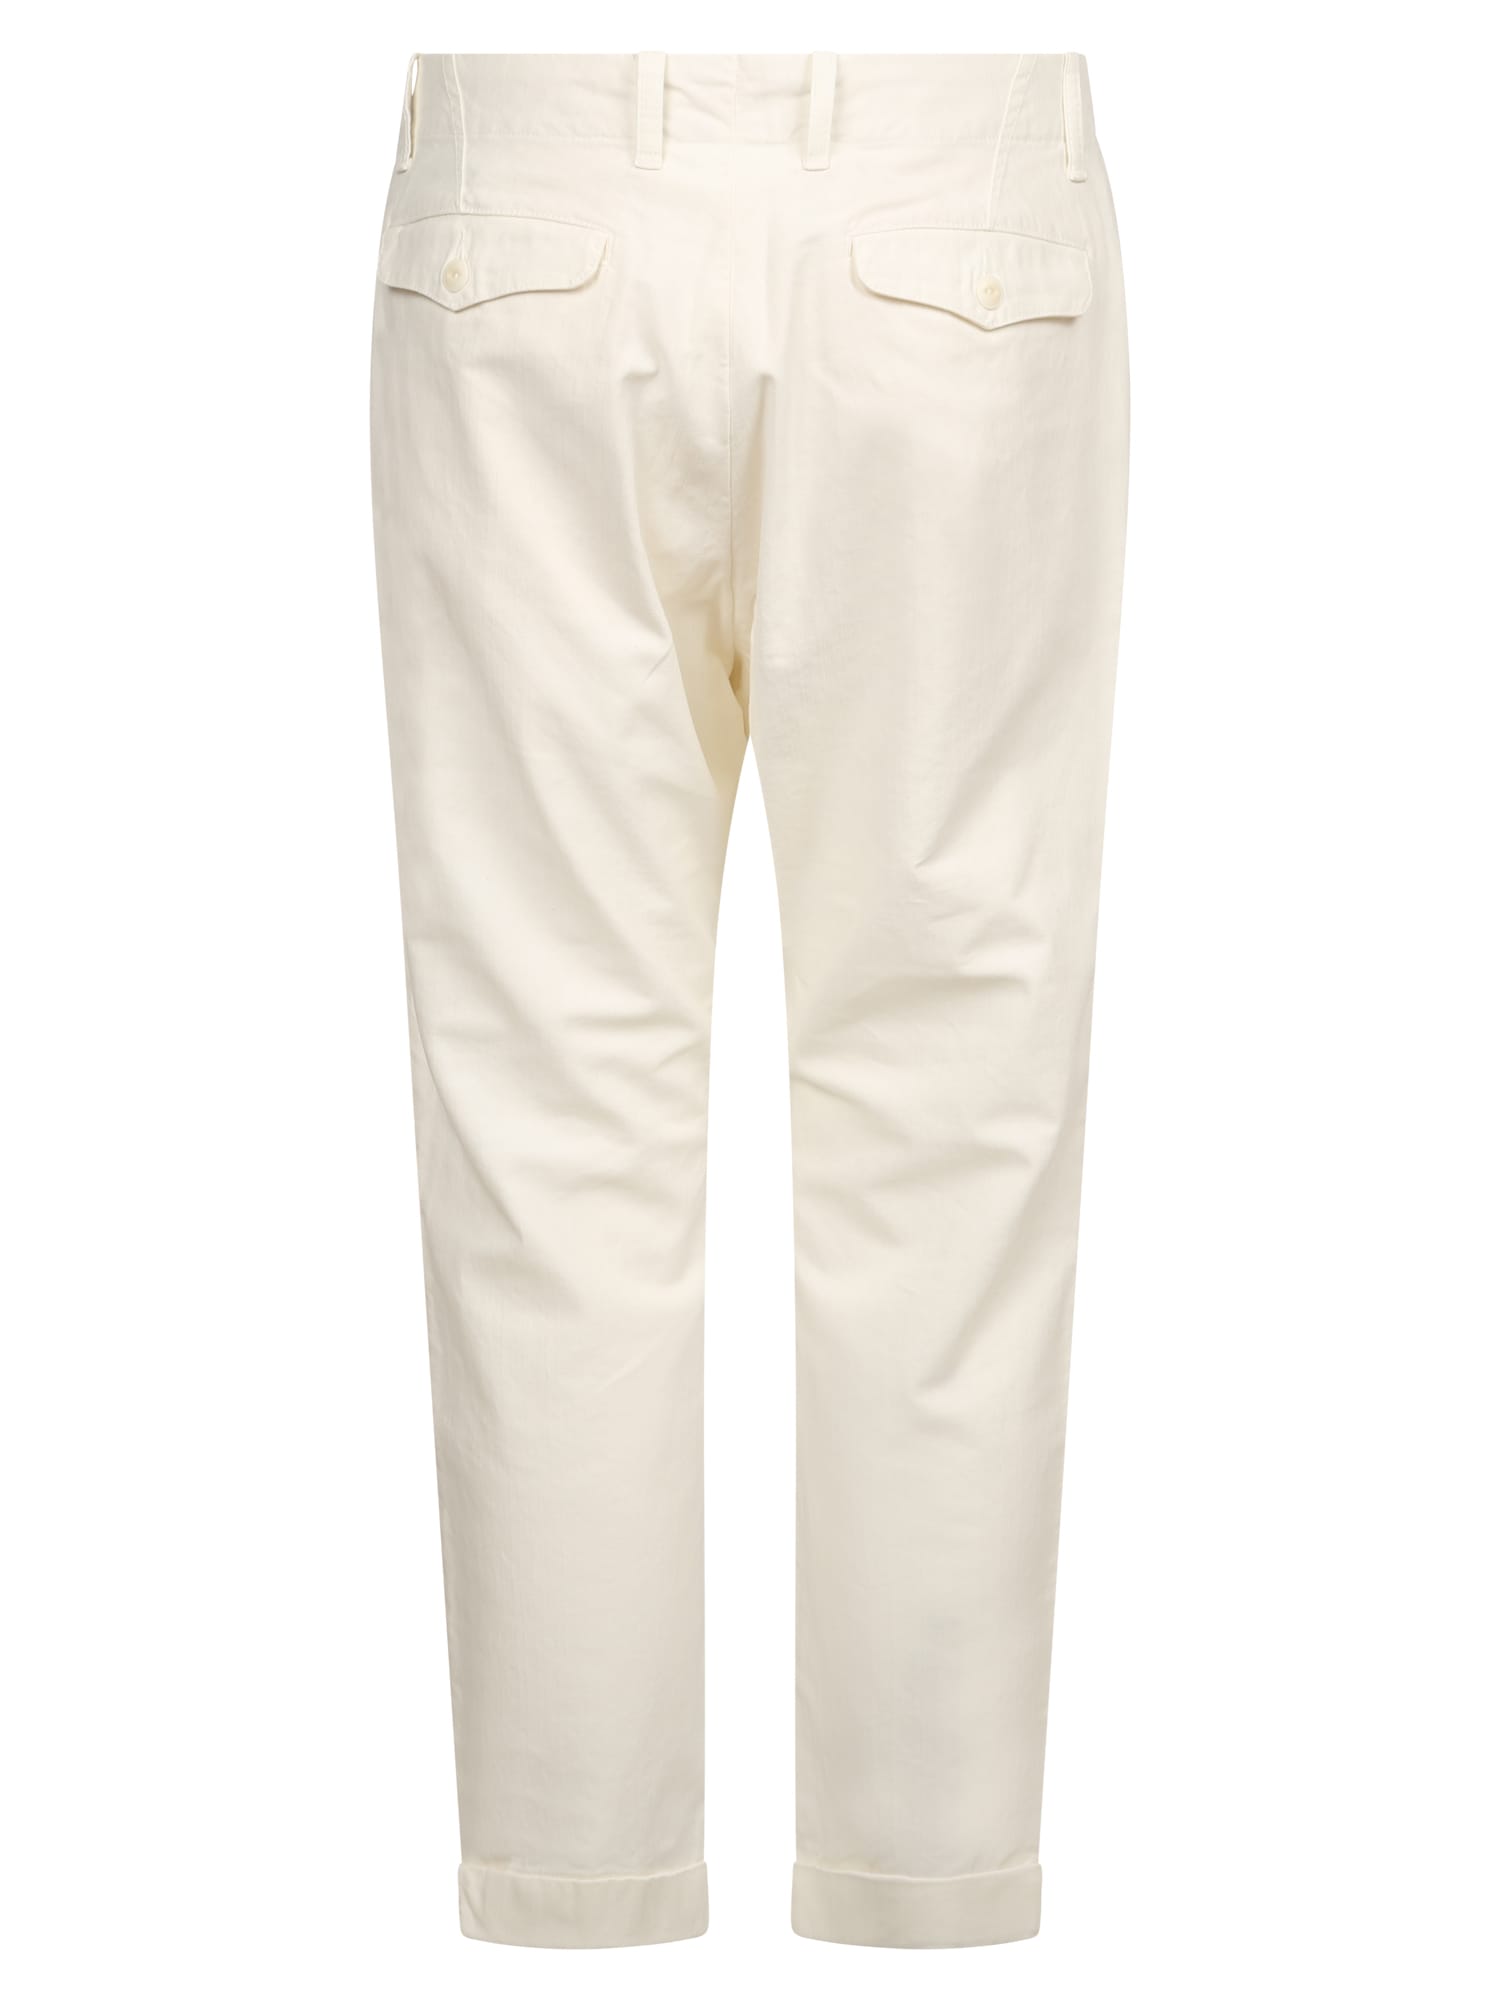 Shop Original Vintage Style White Trousers